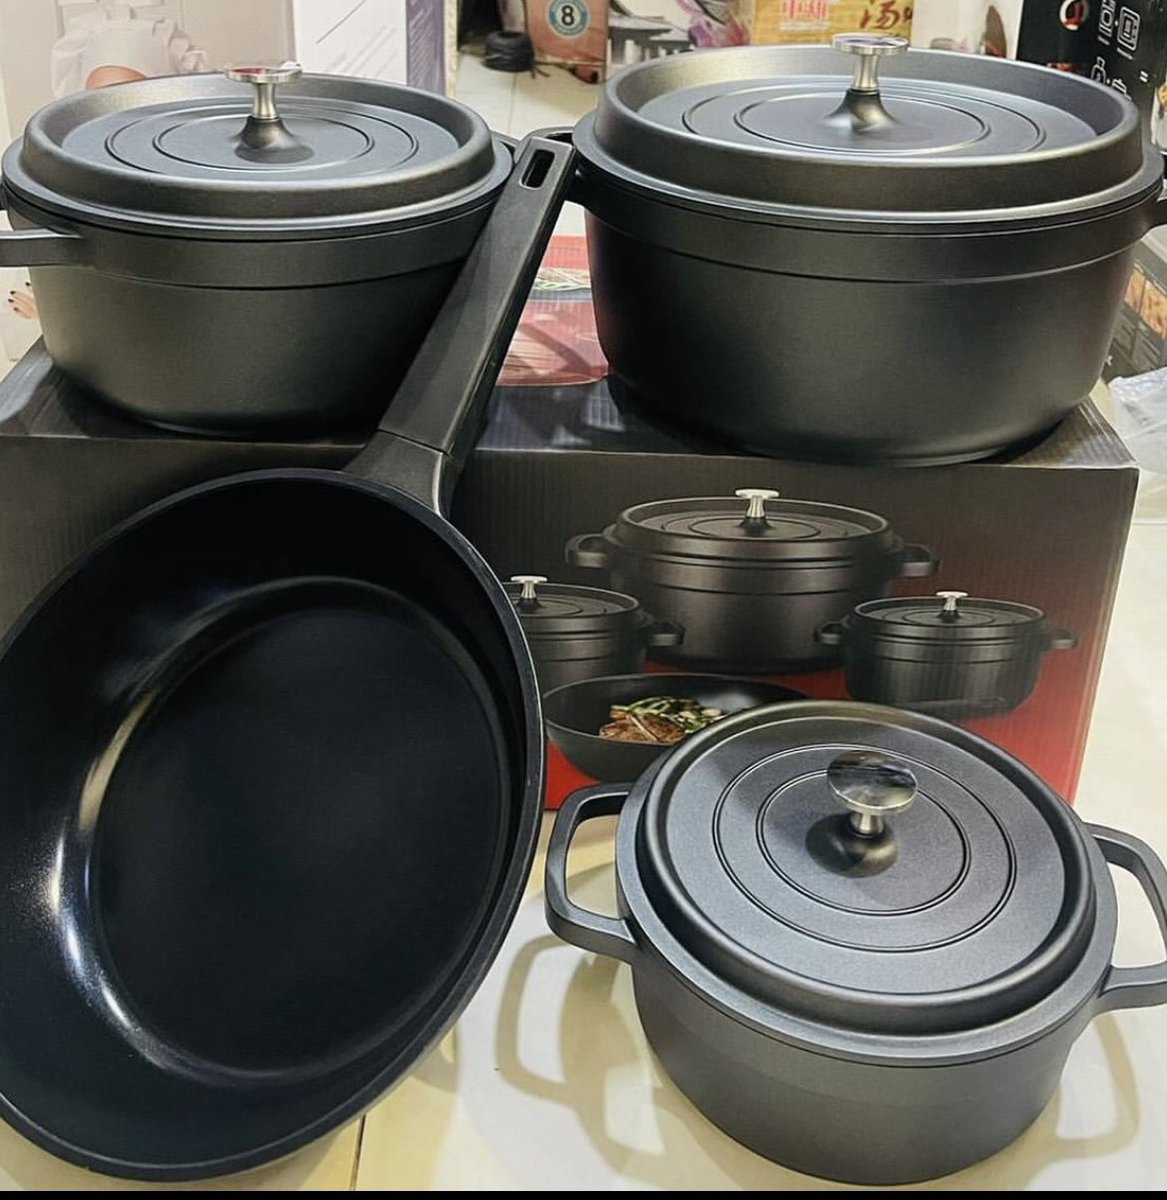 7pcs luxury die cast cookware set Anti scratch interior , works with induction gas cooker. Set includes: 28cm casserole, 24cm casserole, 28cm frying pan, 20cm casserole. 130,000 naira